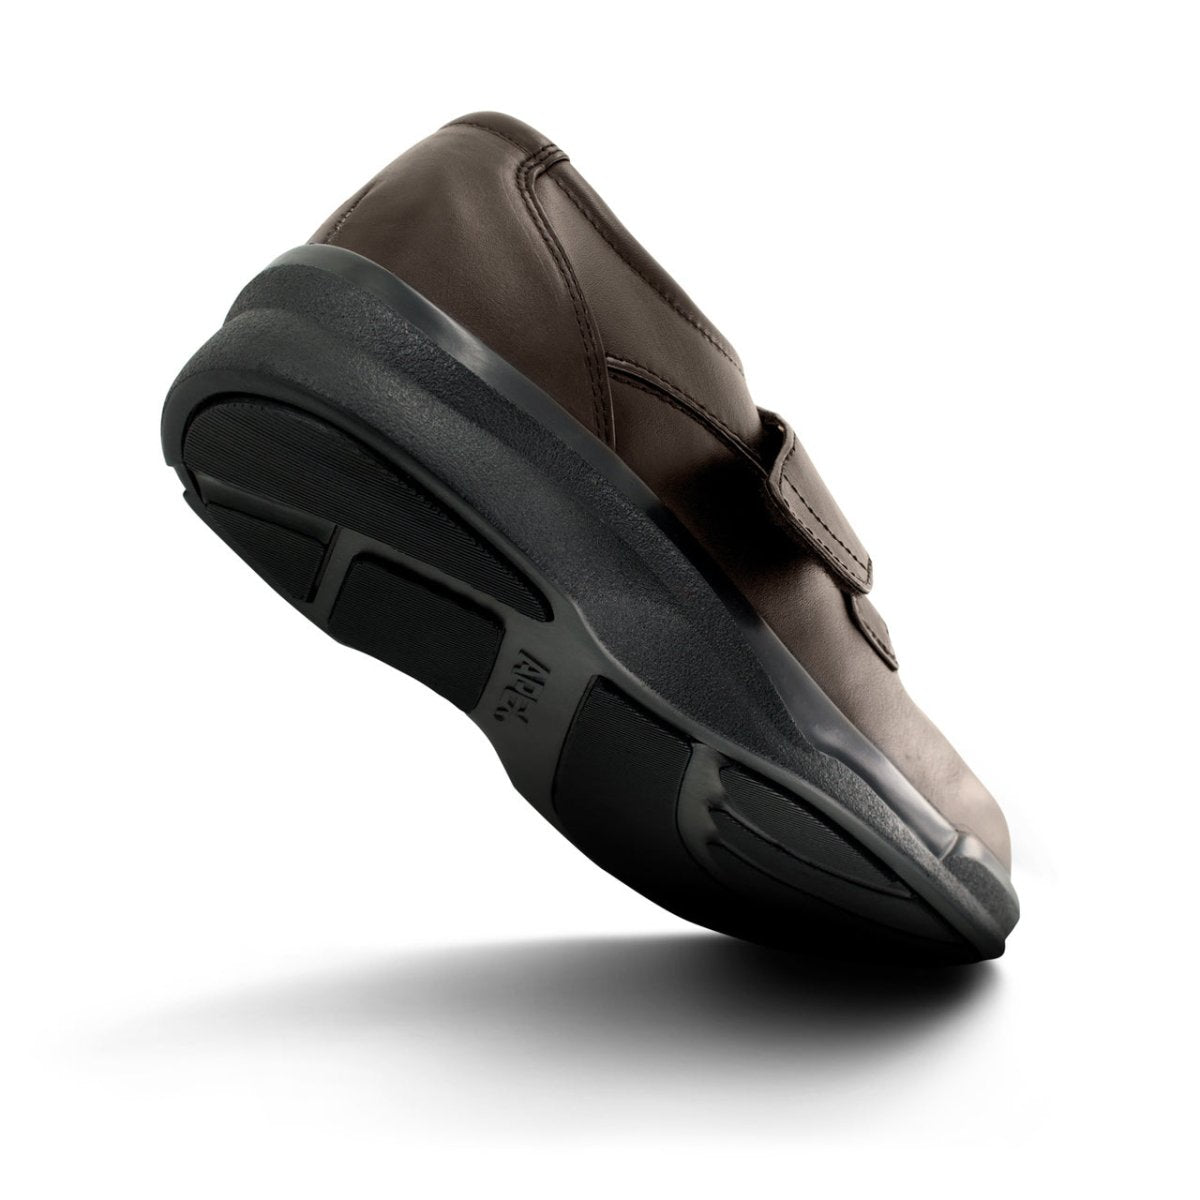 APEX B3100M BIOMECHANICAL SINGLE STRAP MEN'S CASUAL SHOE IN BROWN - TLW Shoes